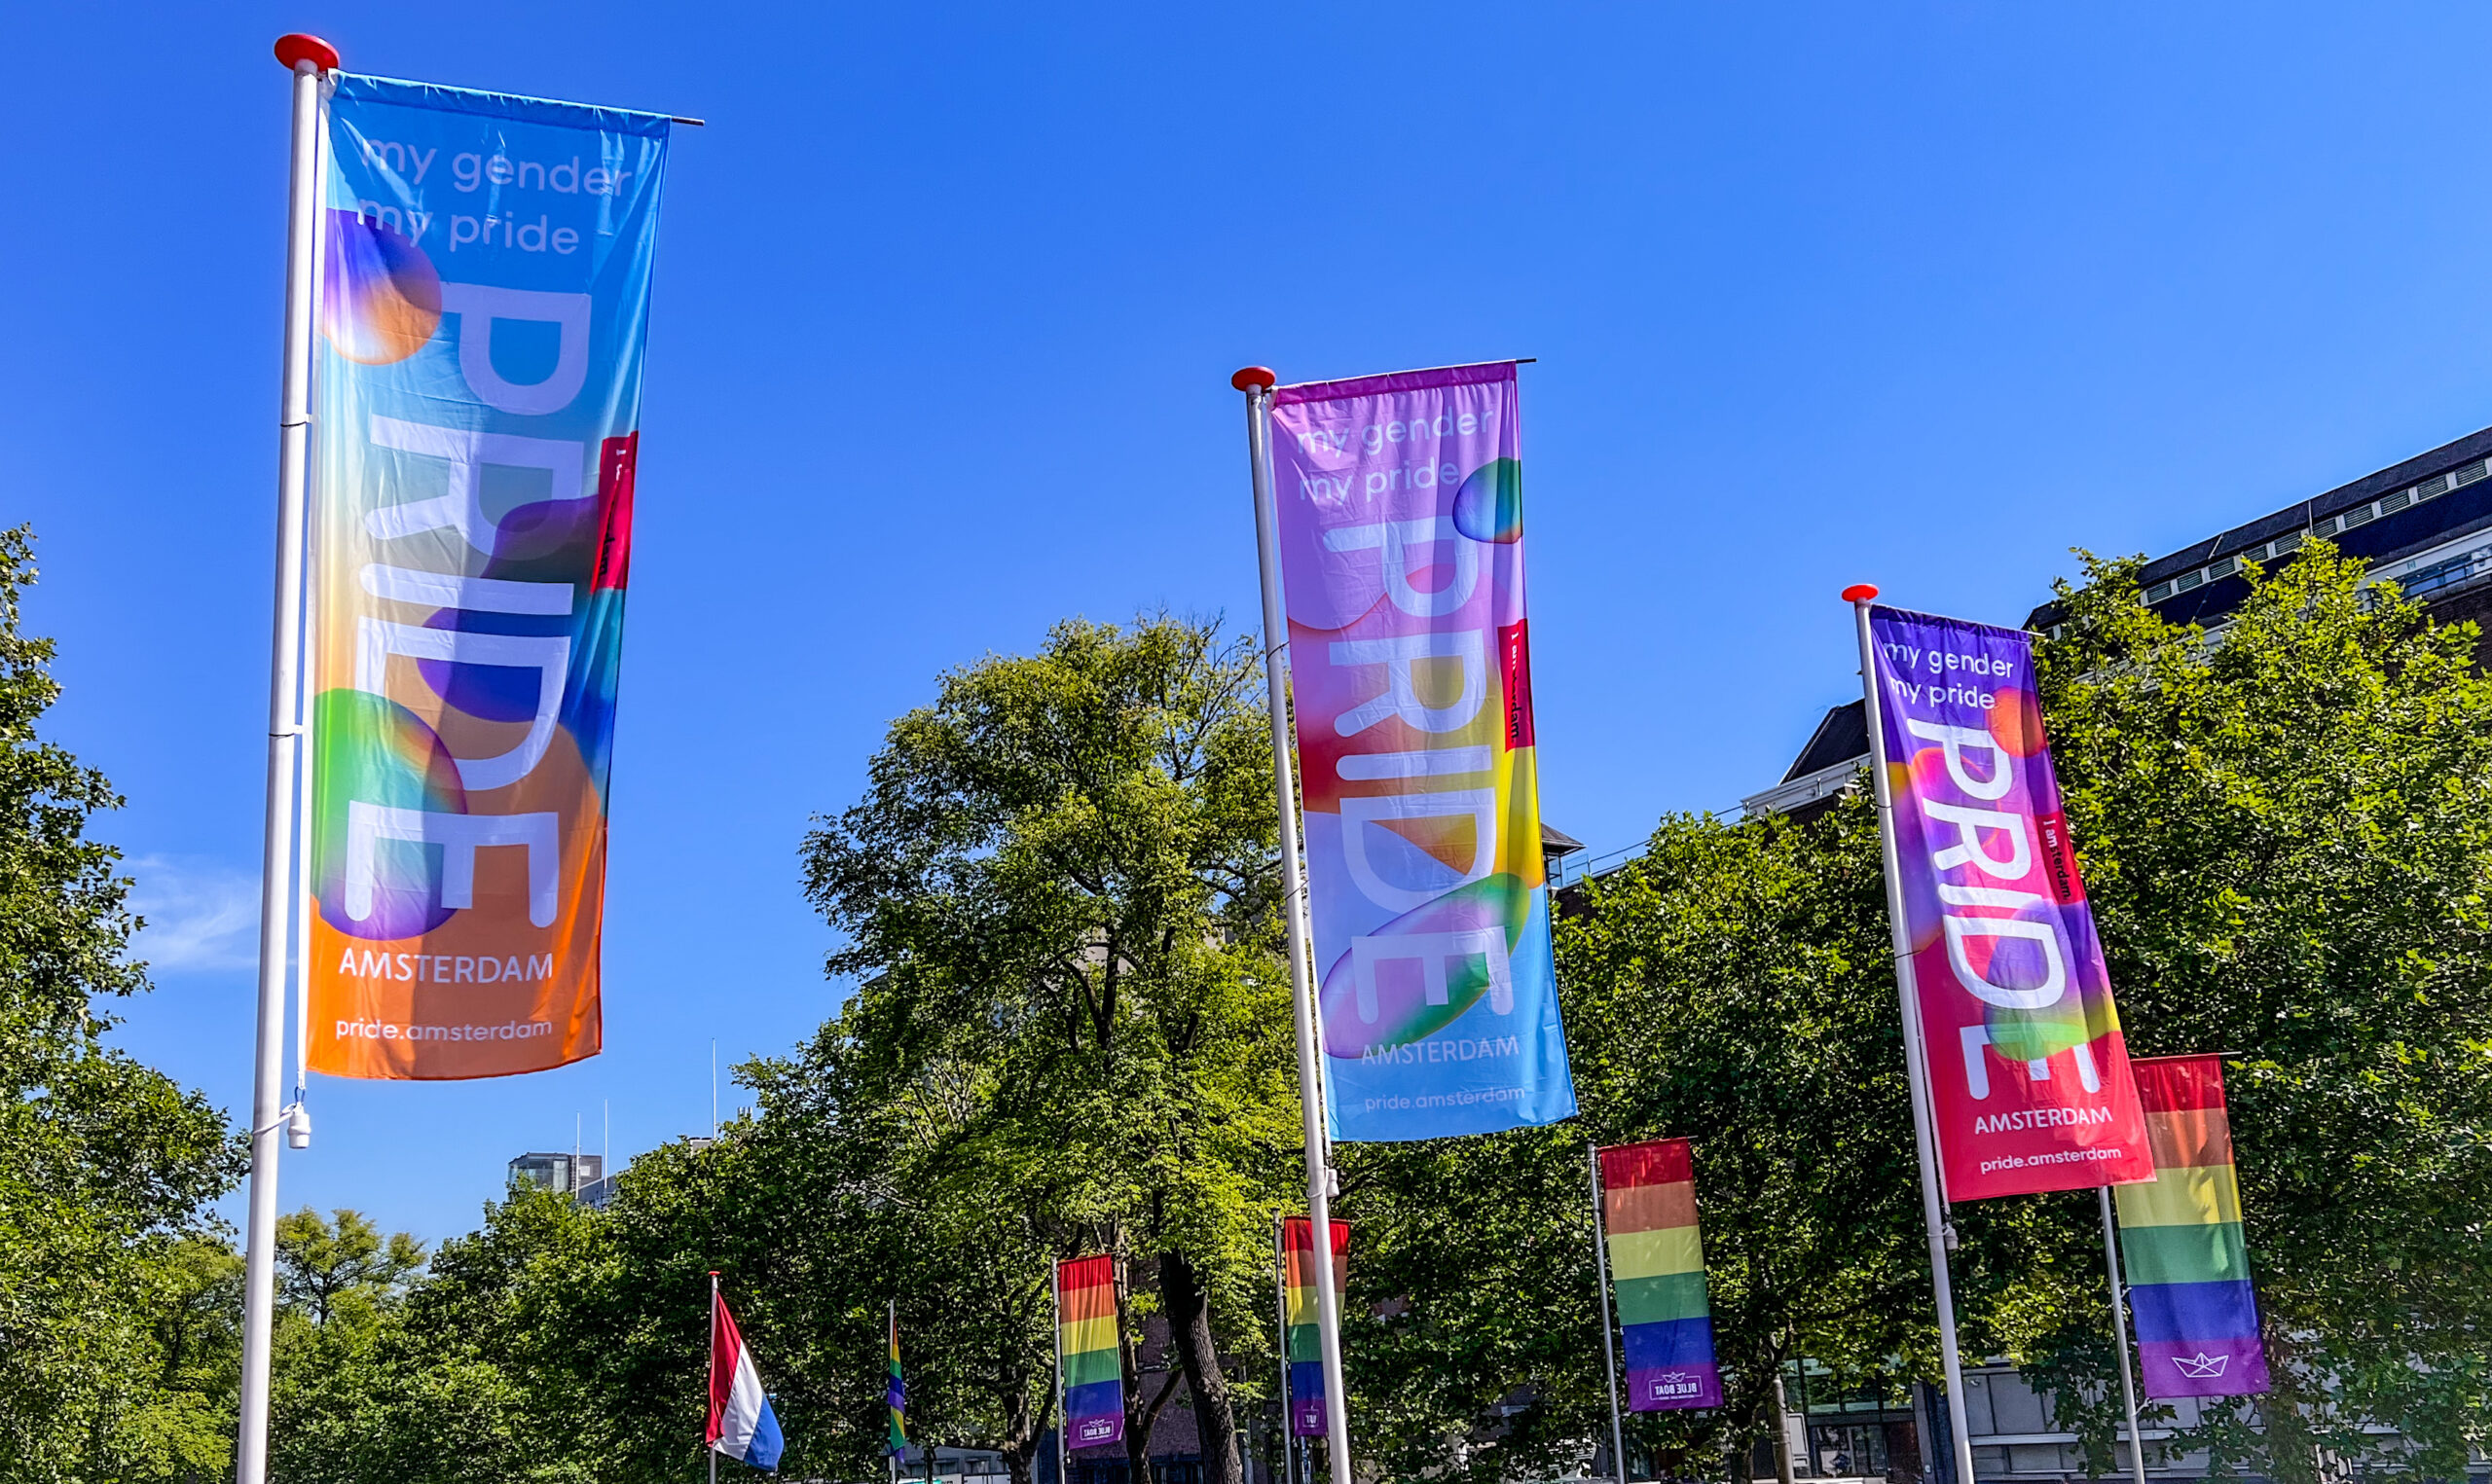 Pride 2022 flags in Amsterdam